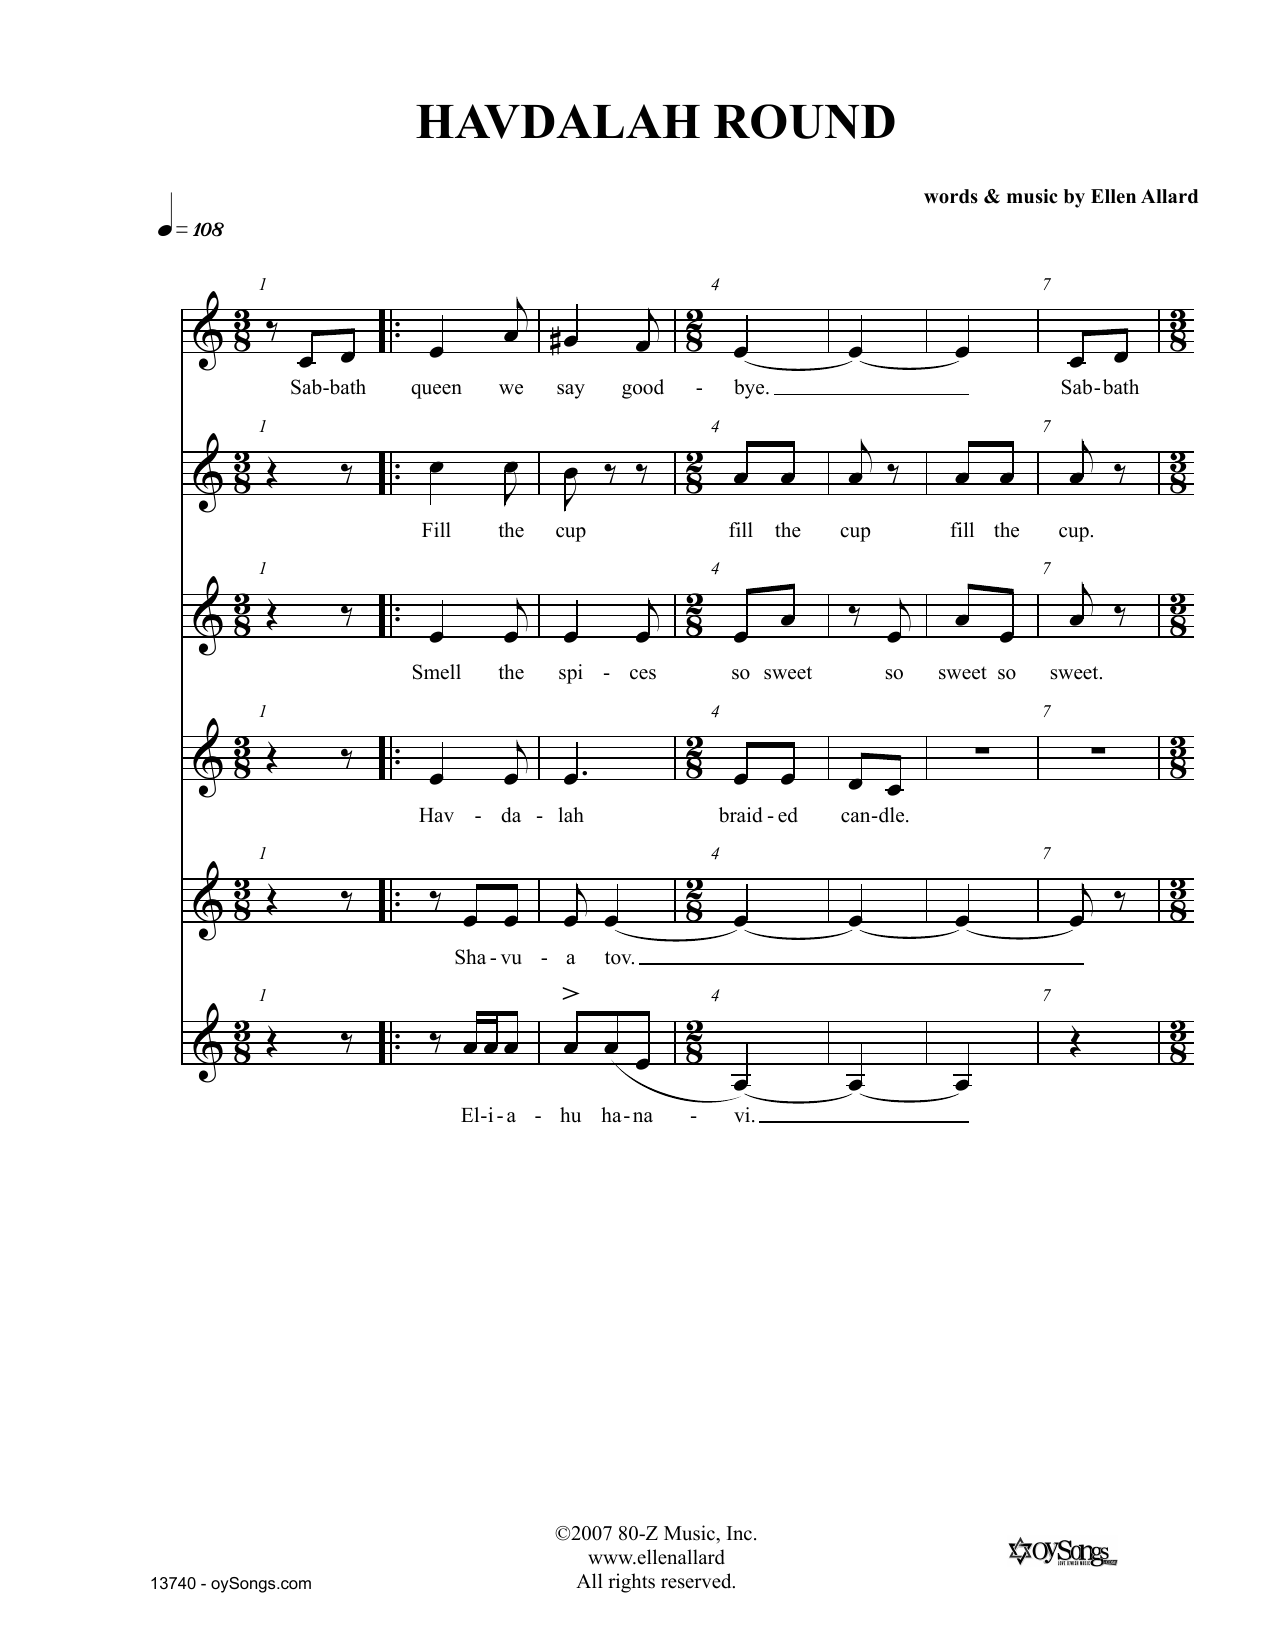 Download Ellen Allard Havdalah Round Sheet Music and learn how to play Melody Line, Lyrics & Chords PDF digital score in minutes